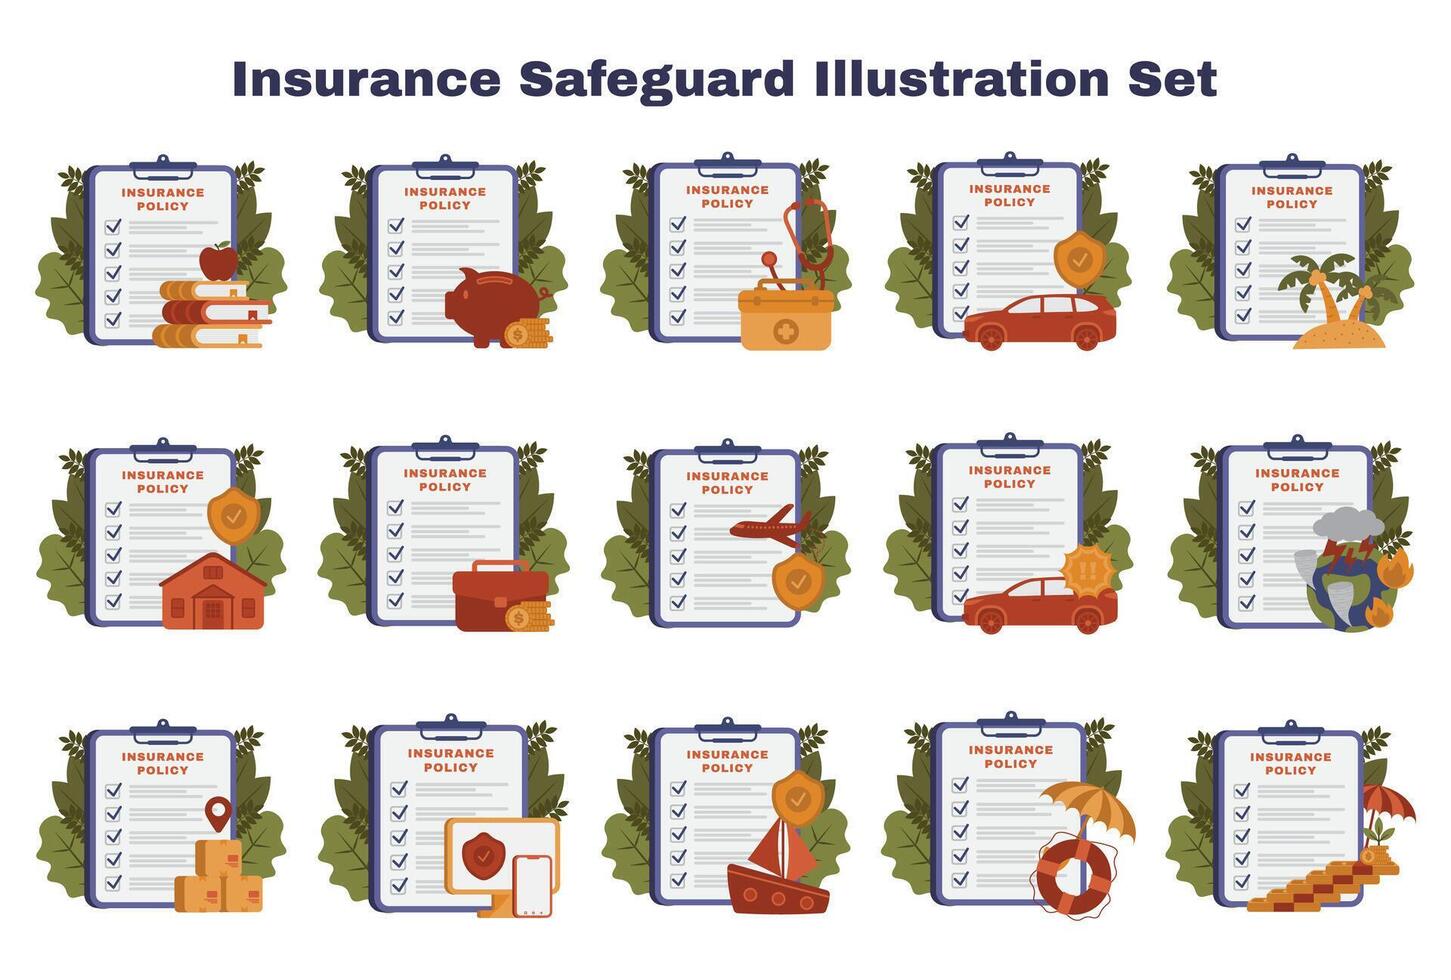 seguro salvaguarda ilustração conjunto vetor